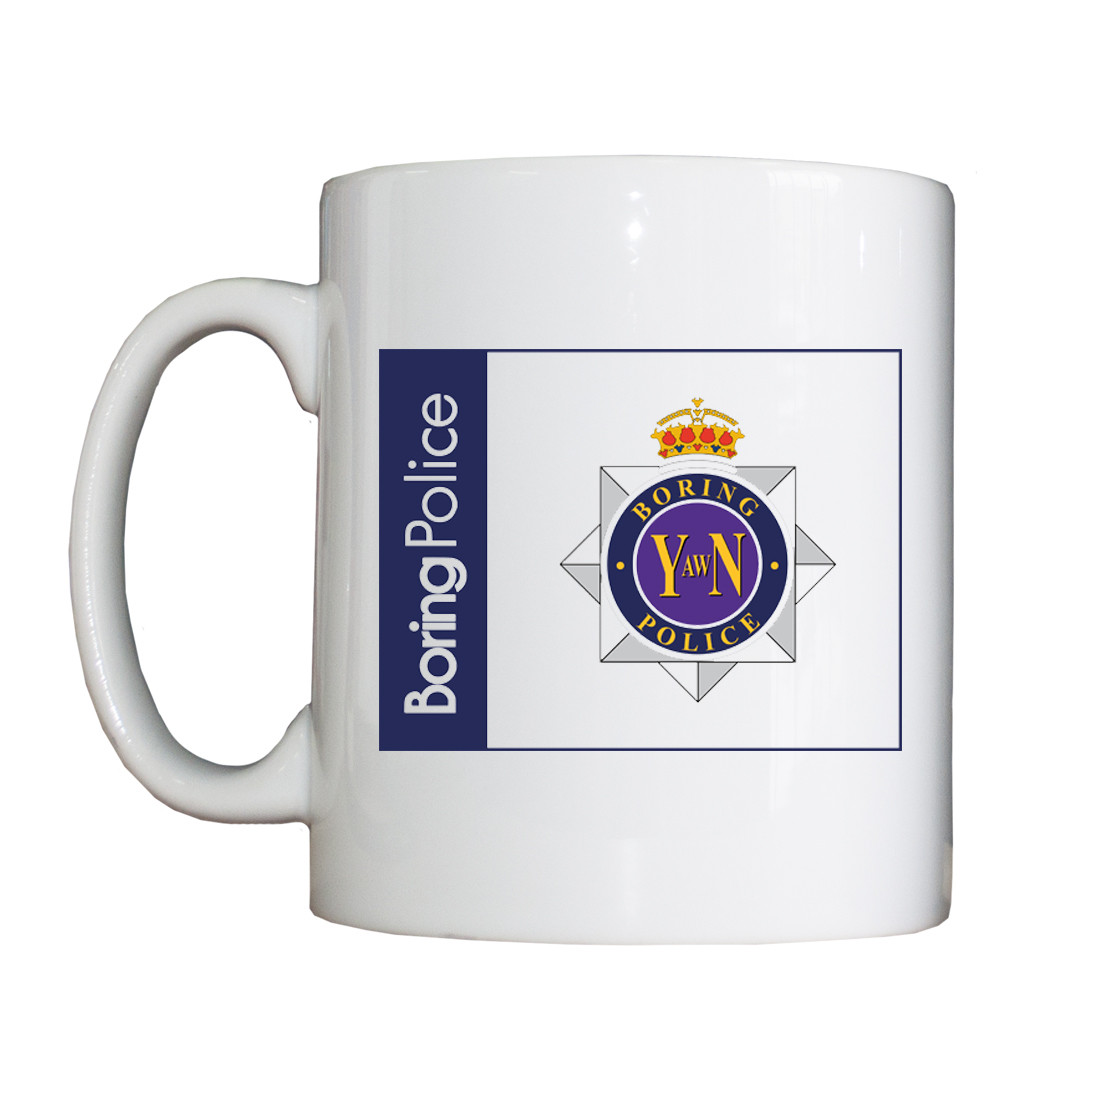 Personalised 'Boring' Drinking Vessel (Mug)